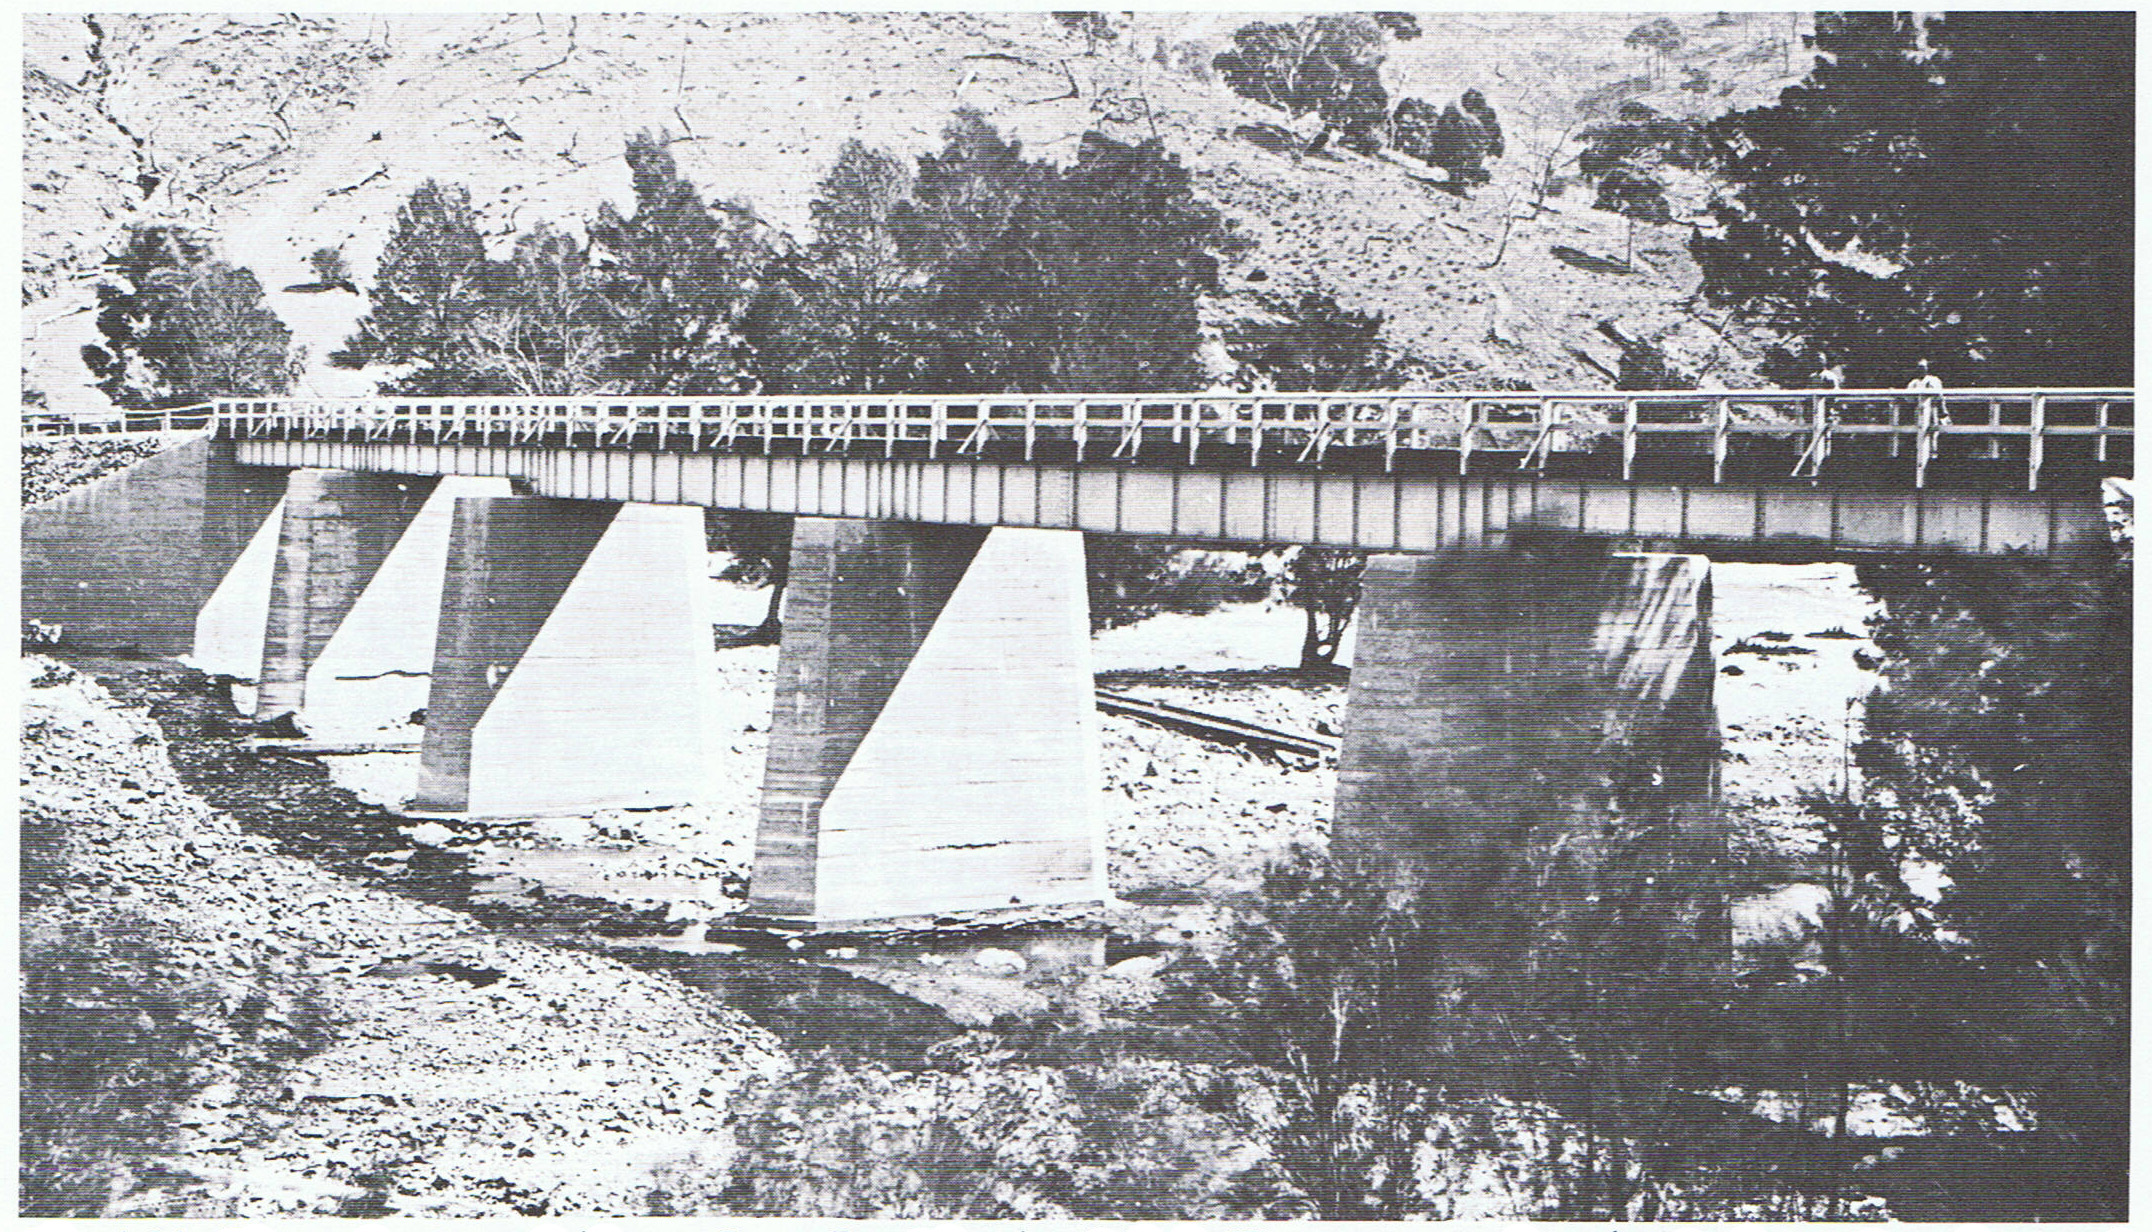 The earlier 5 span bridge